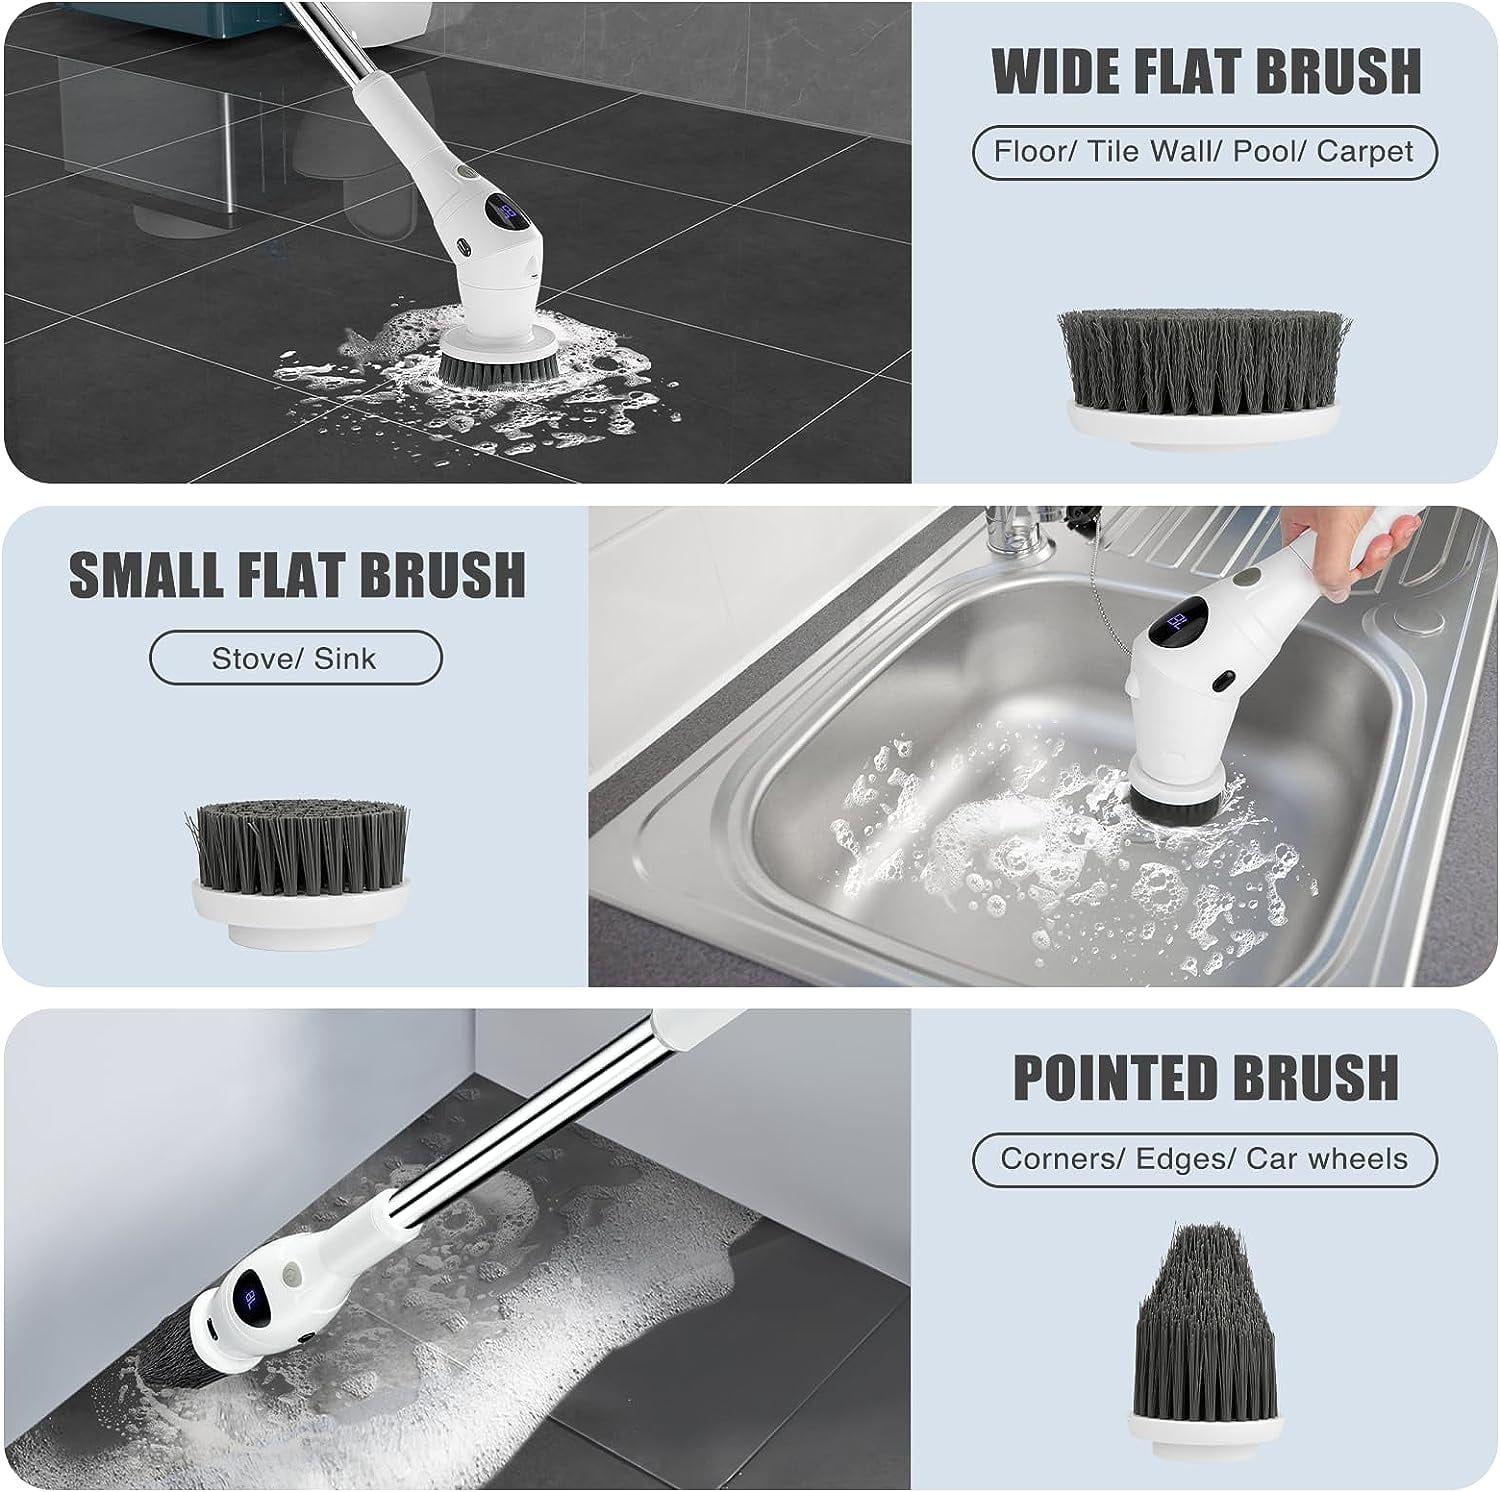 Black+Decker BHPC210 Speedy Scrub Rechargable White Bathroom